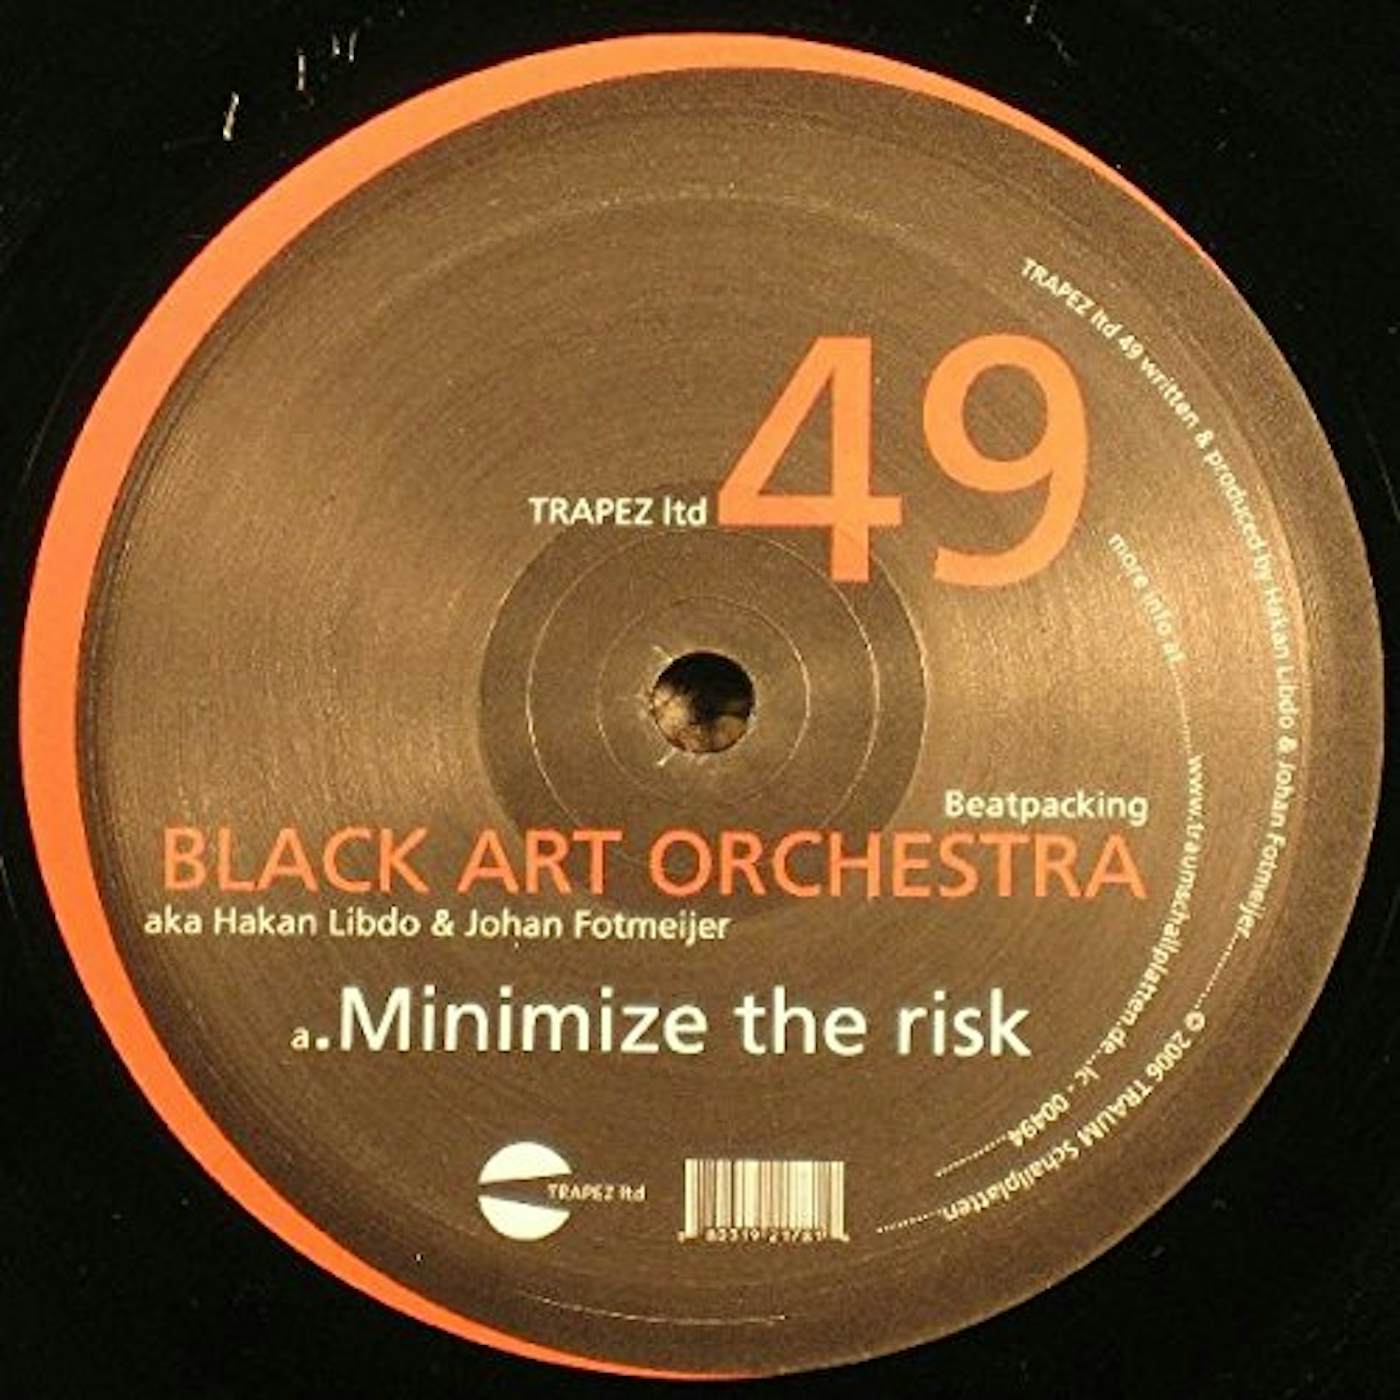 Black Art Orchestra